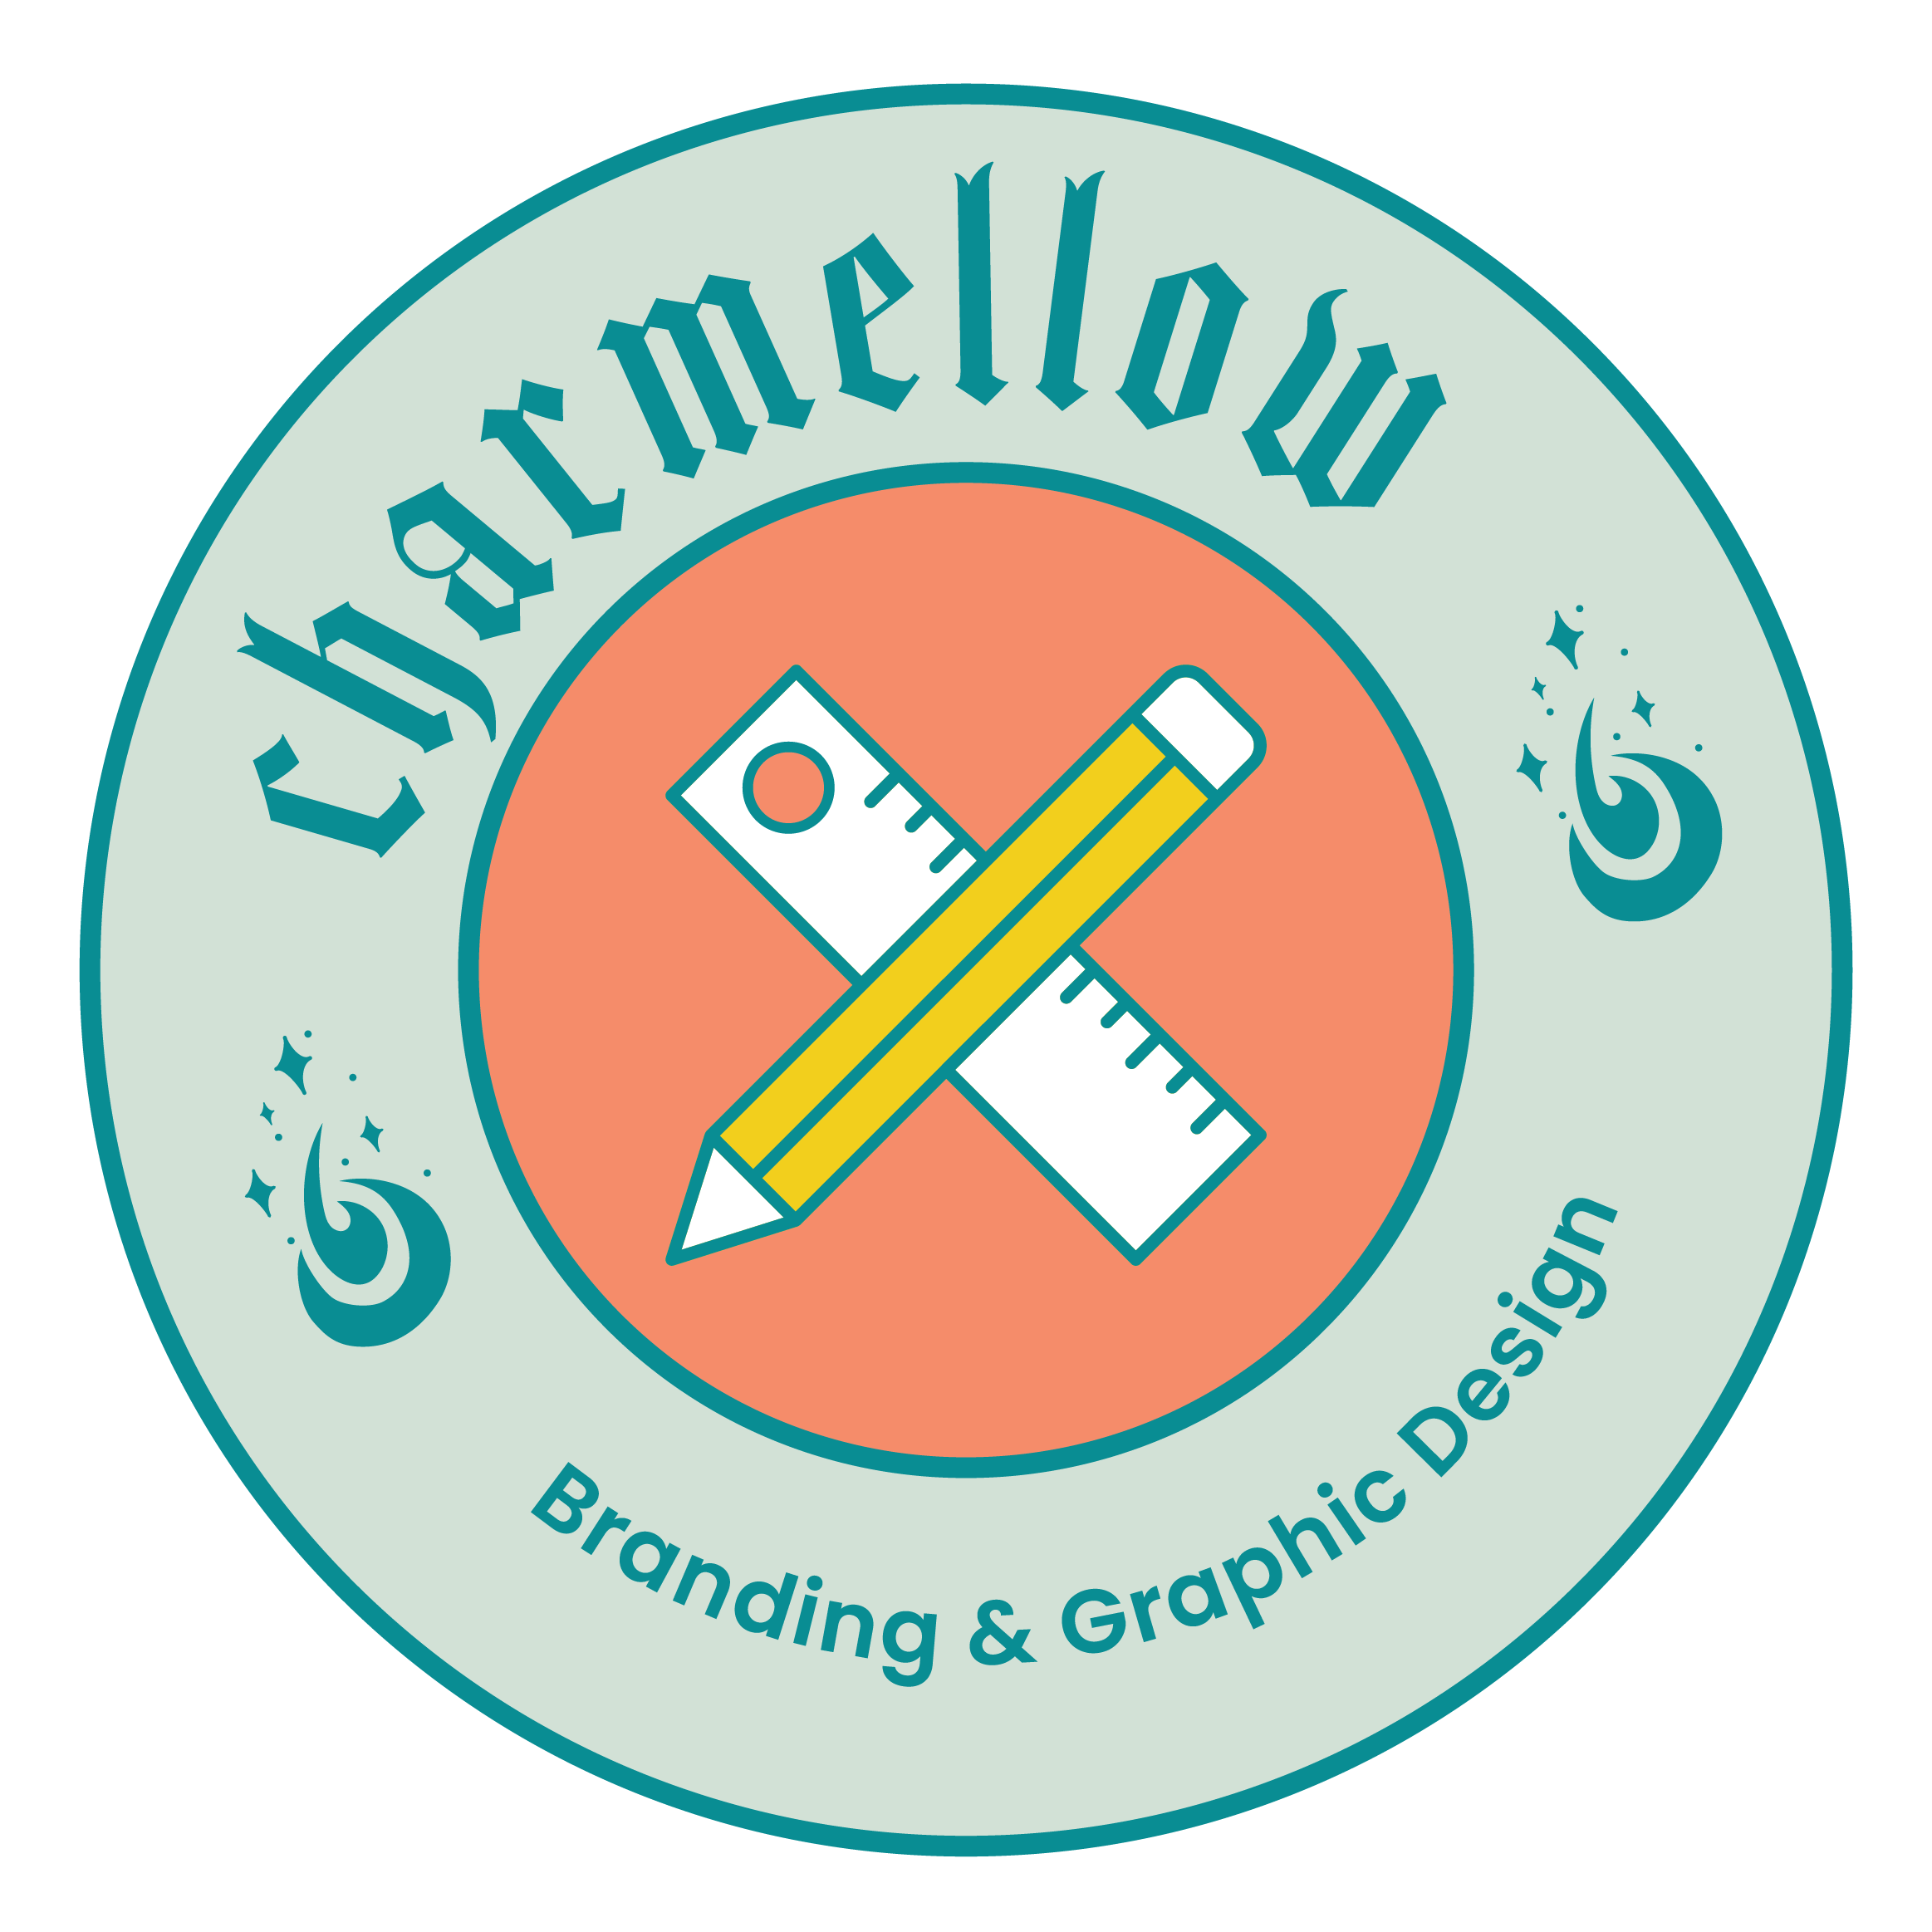 charmellow: branding &amp; graphic design